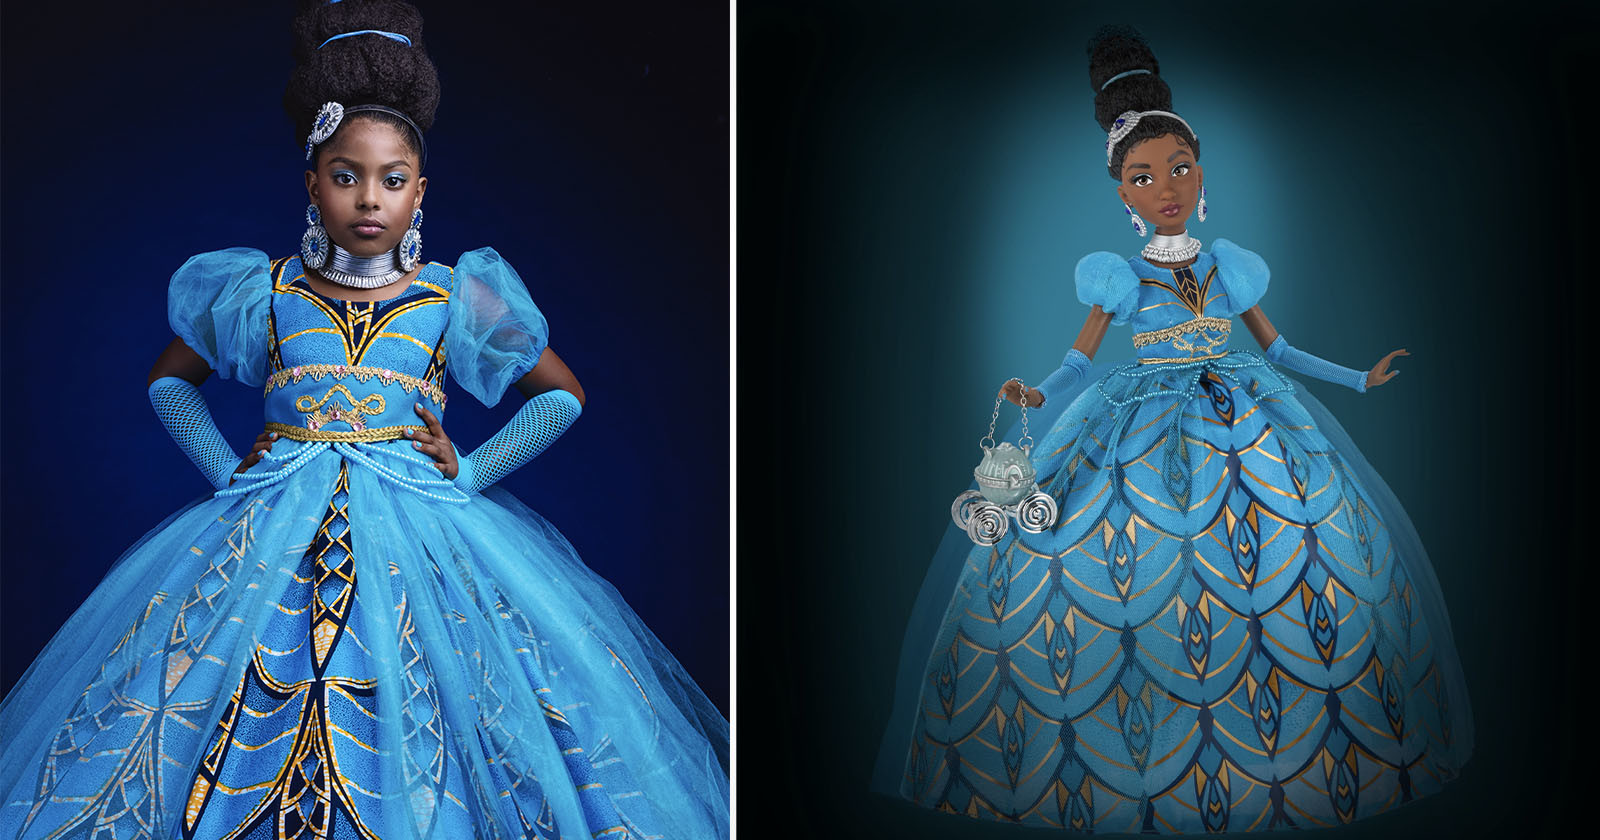  disney turns photographers diverse princess portraits into dolls 